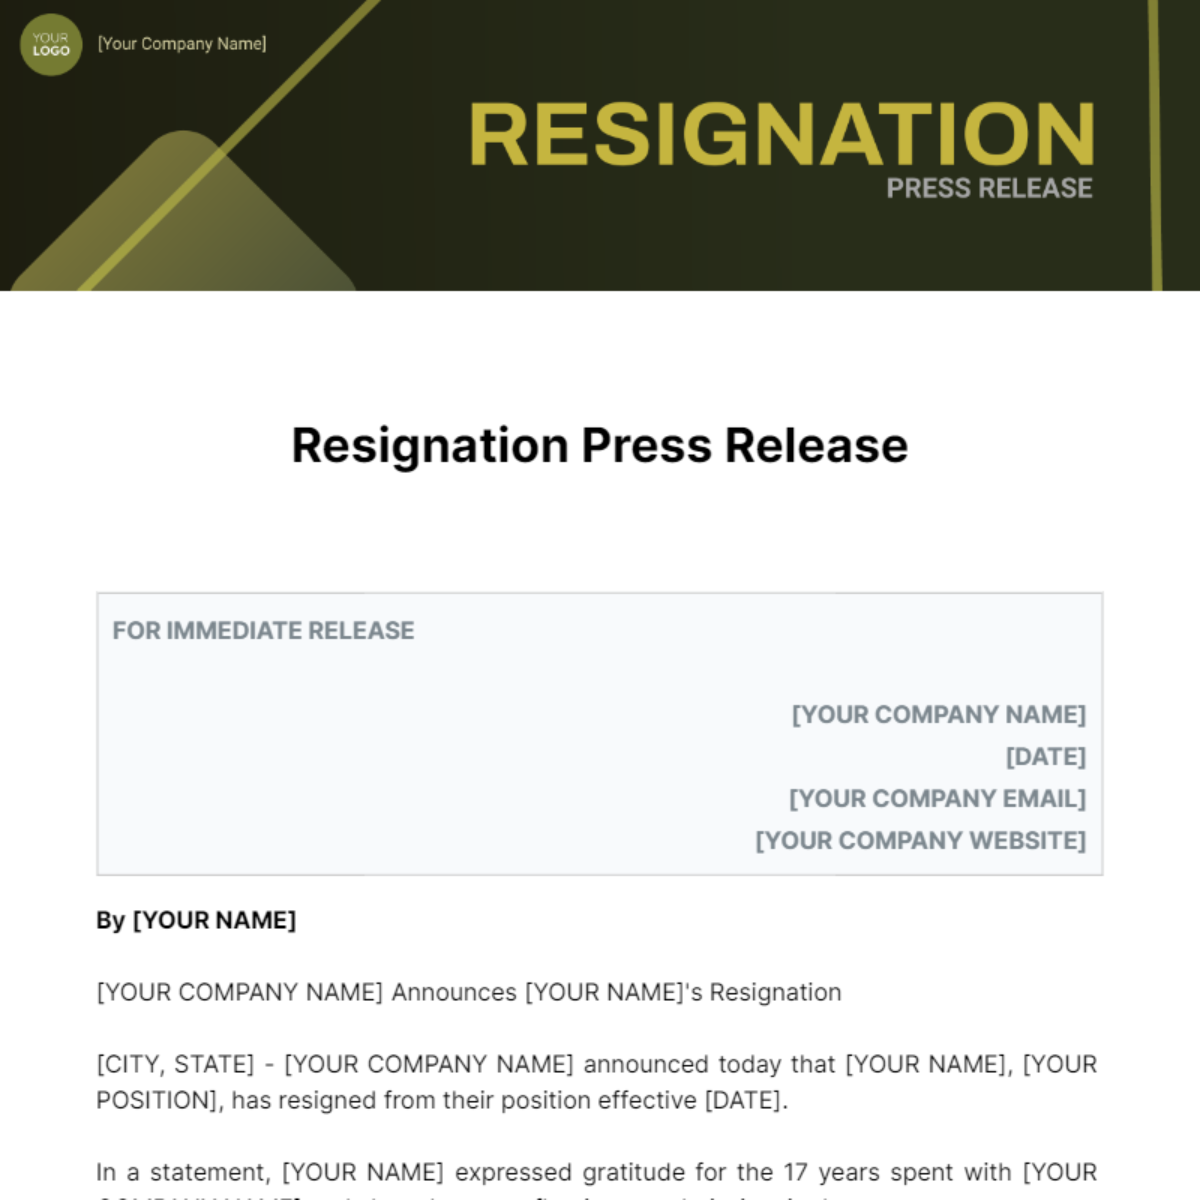 Resignation Press Release Template